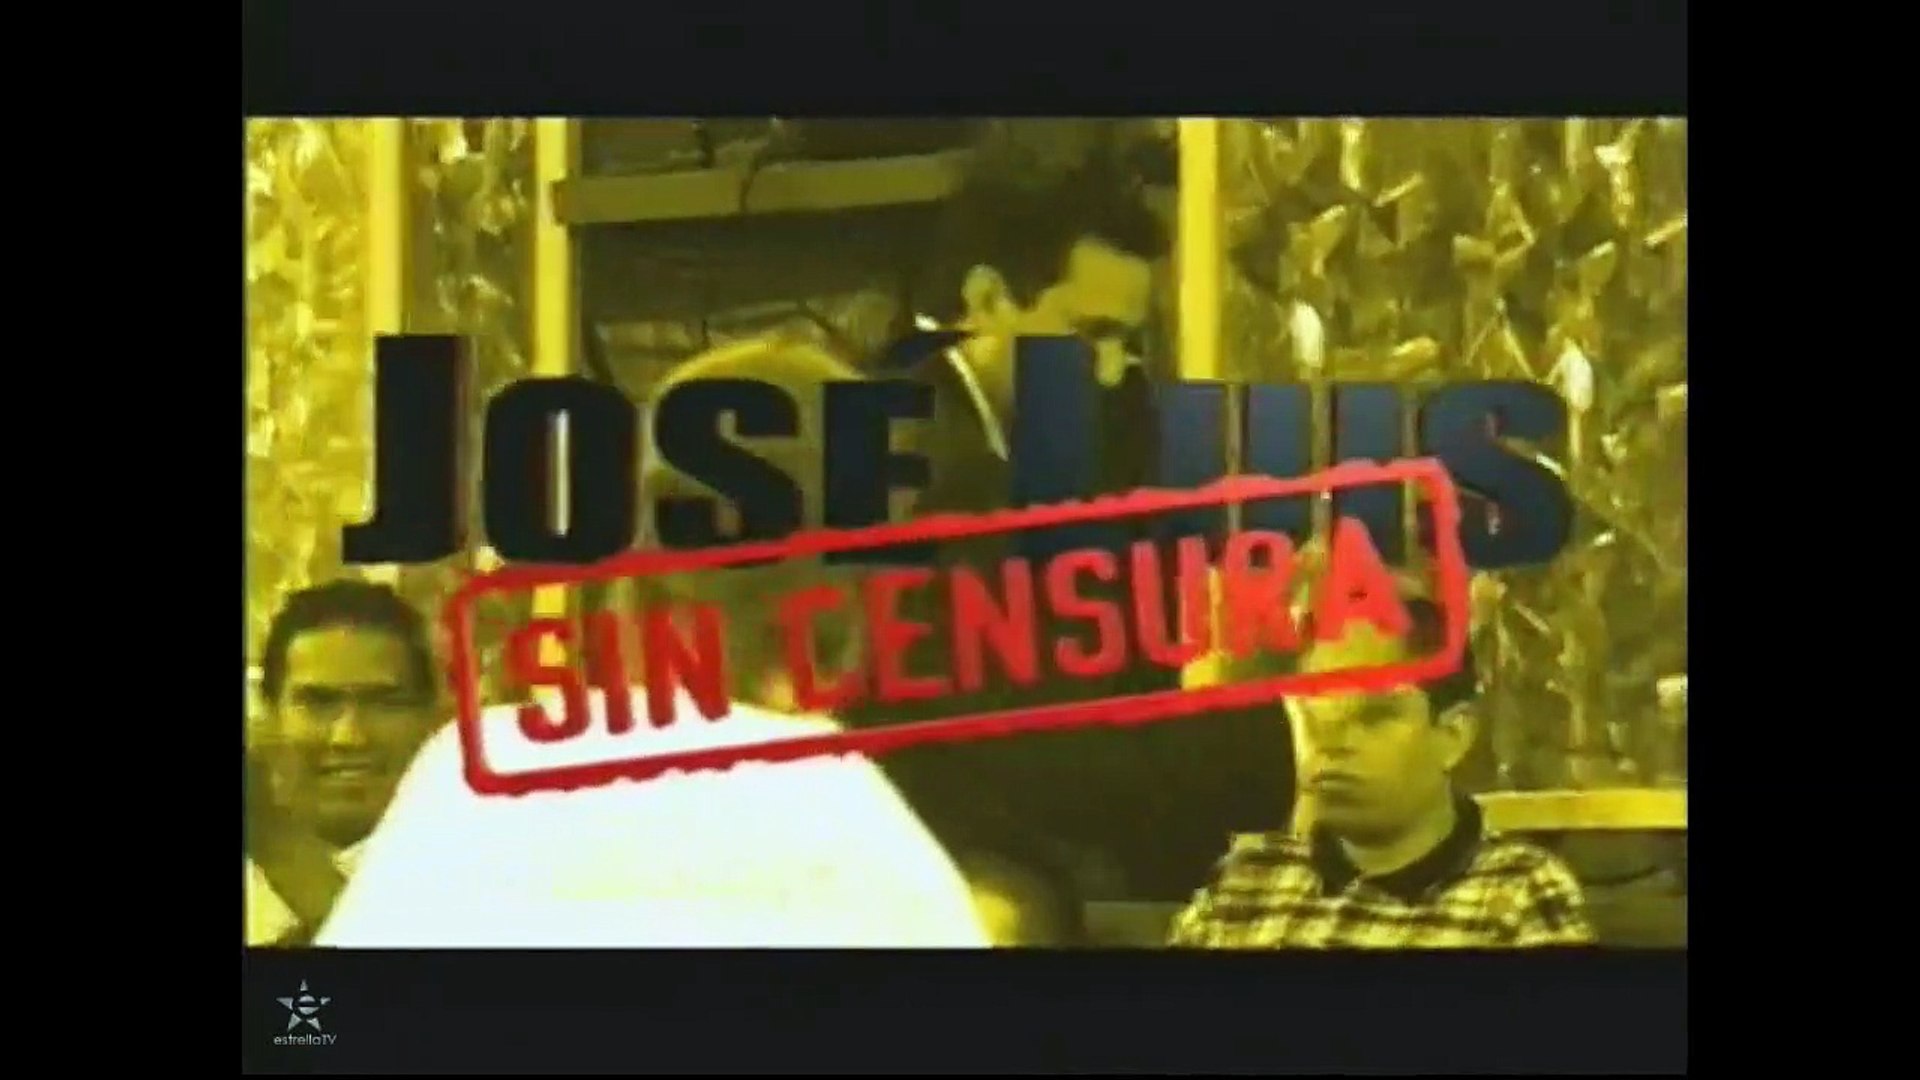 Jose Sin Censura Videos cocksucker bigbanana